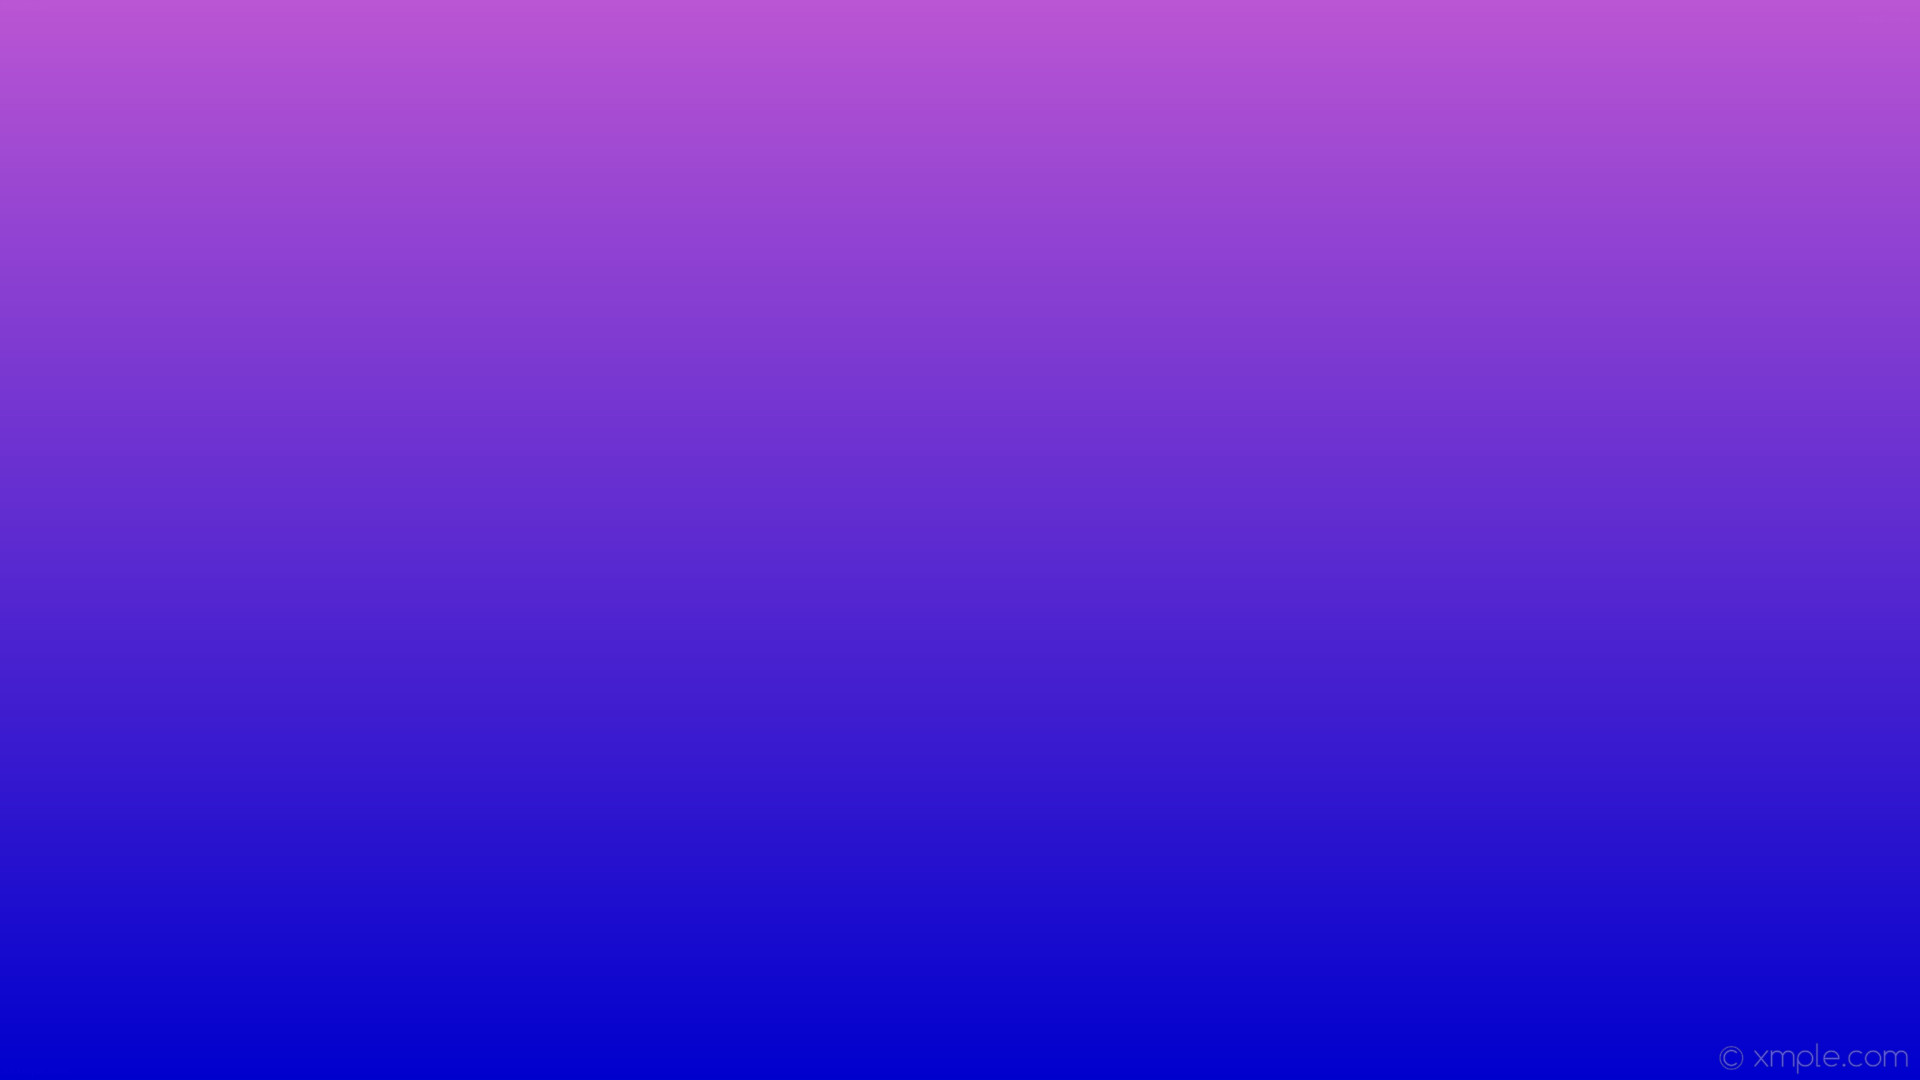 1920x1080 wallpaper blue gradient purple linear medium orchid medium blue #ba55d3  #0000cd 90Â°